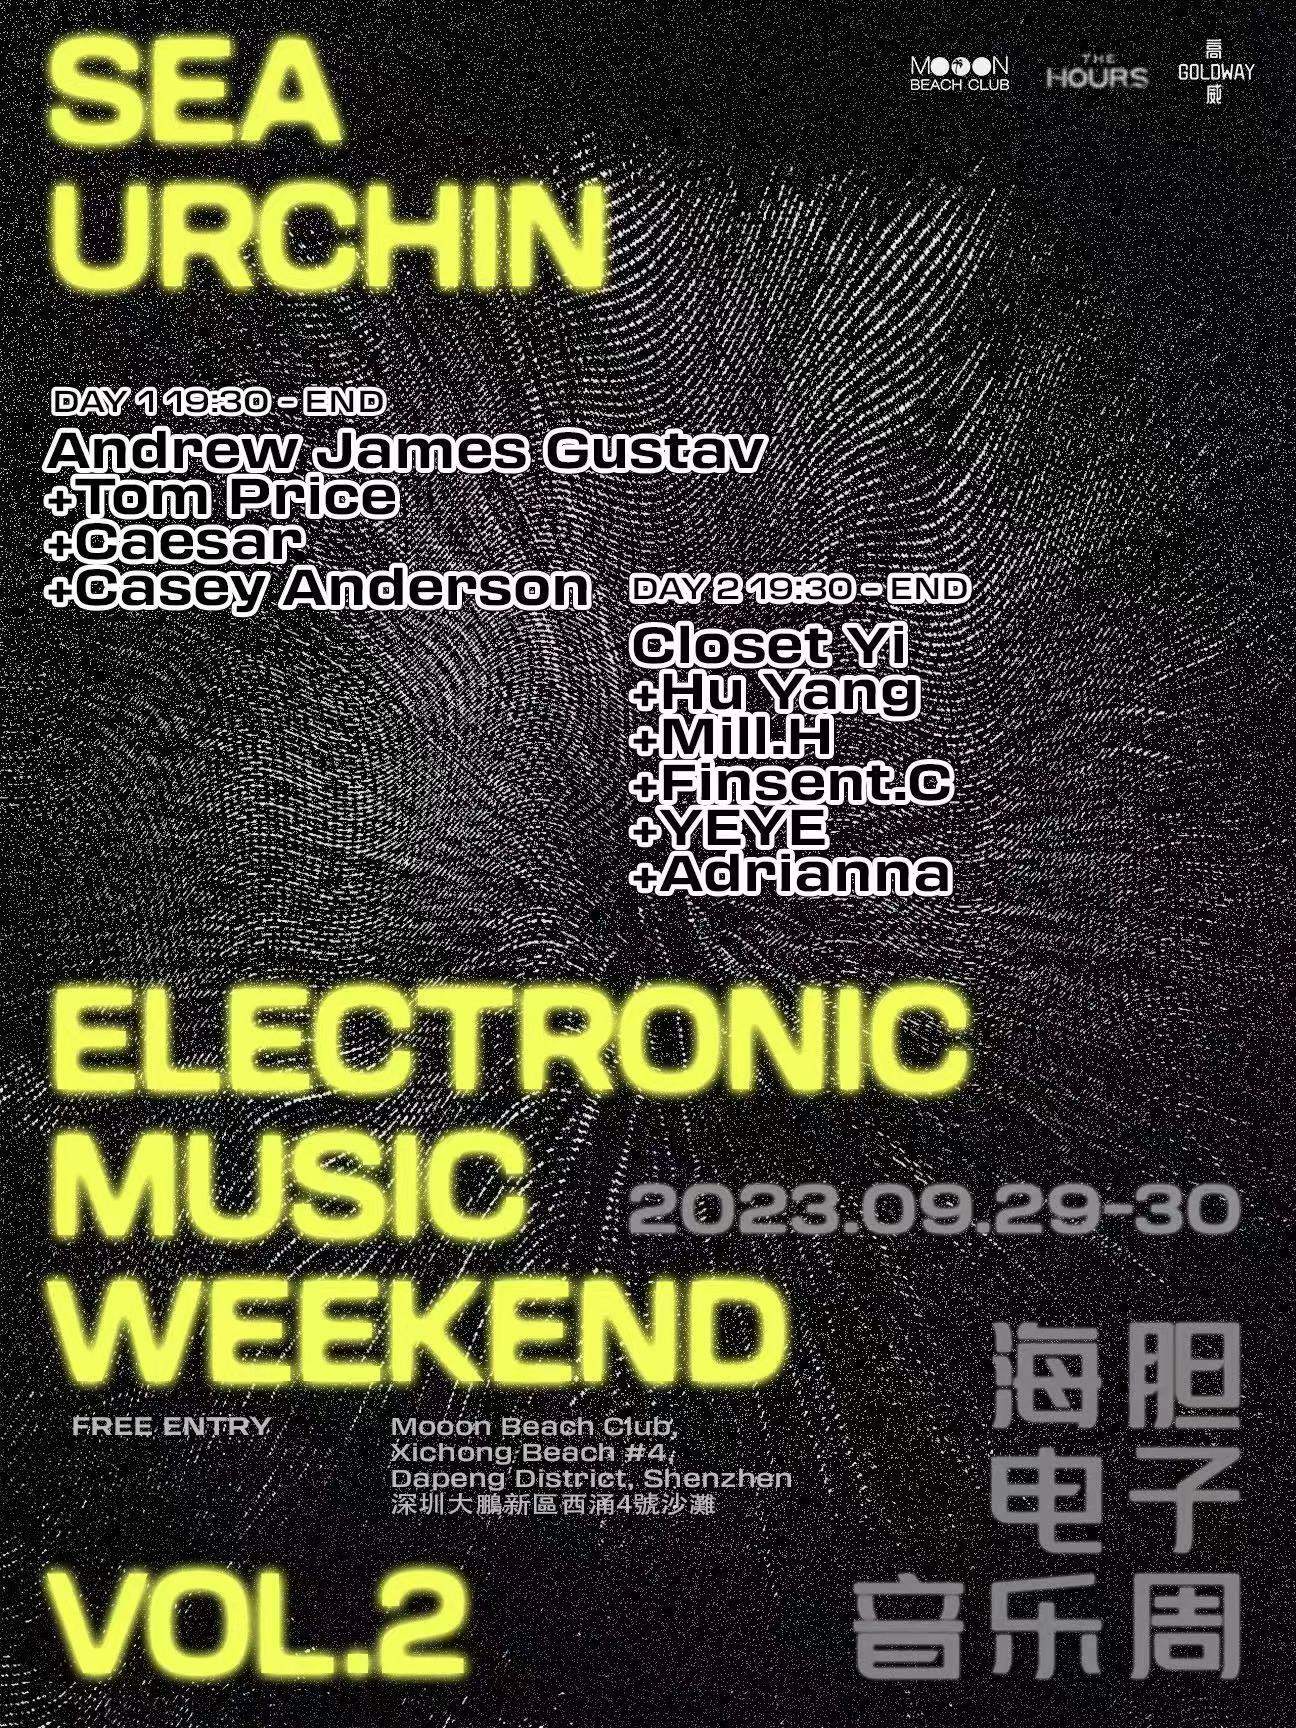 Sea Urchin Music Weekend - フライヤー表